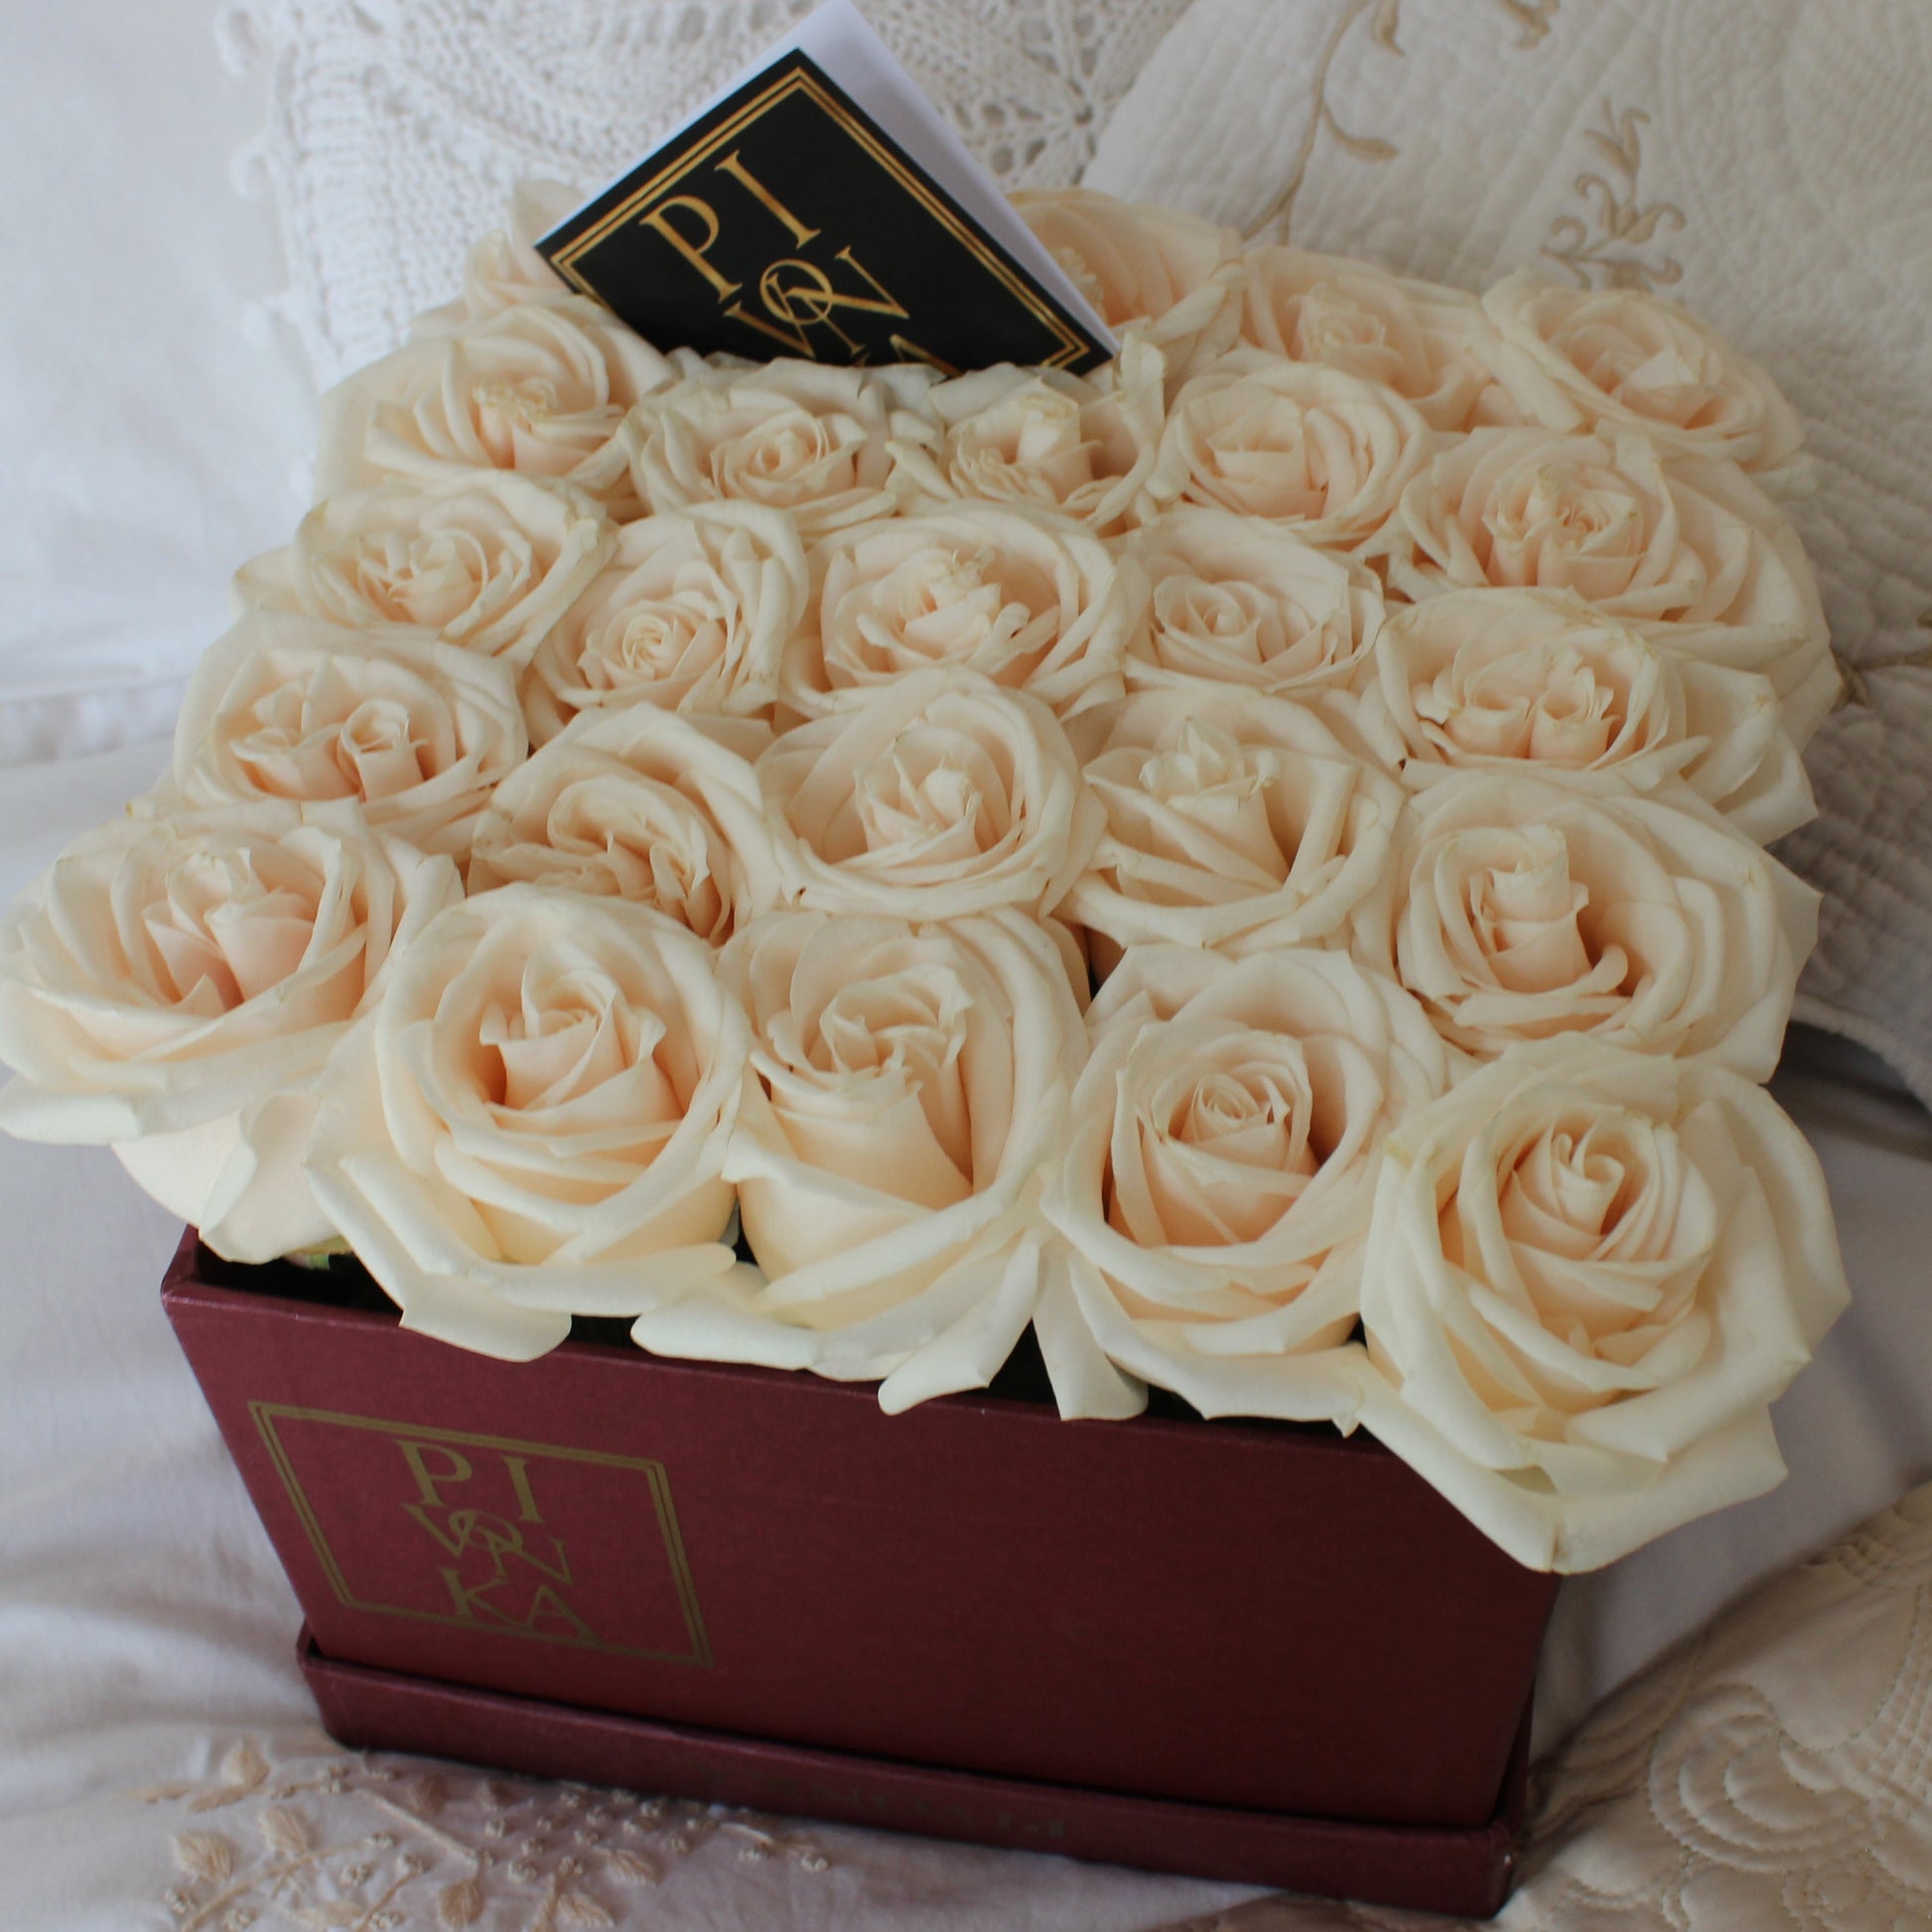 Pivonka Flores. Arreglo cuadrangular de 25 rosas blancas en base vino